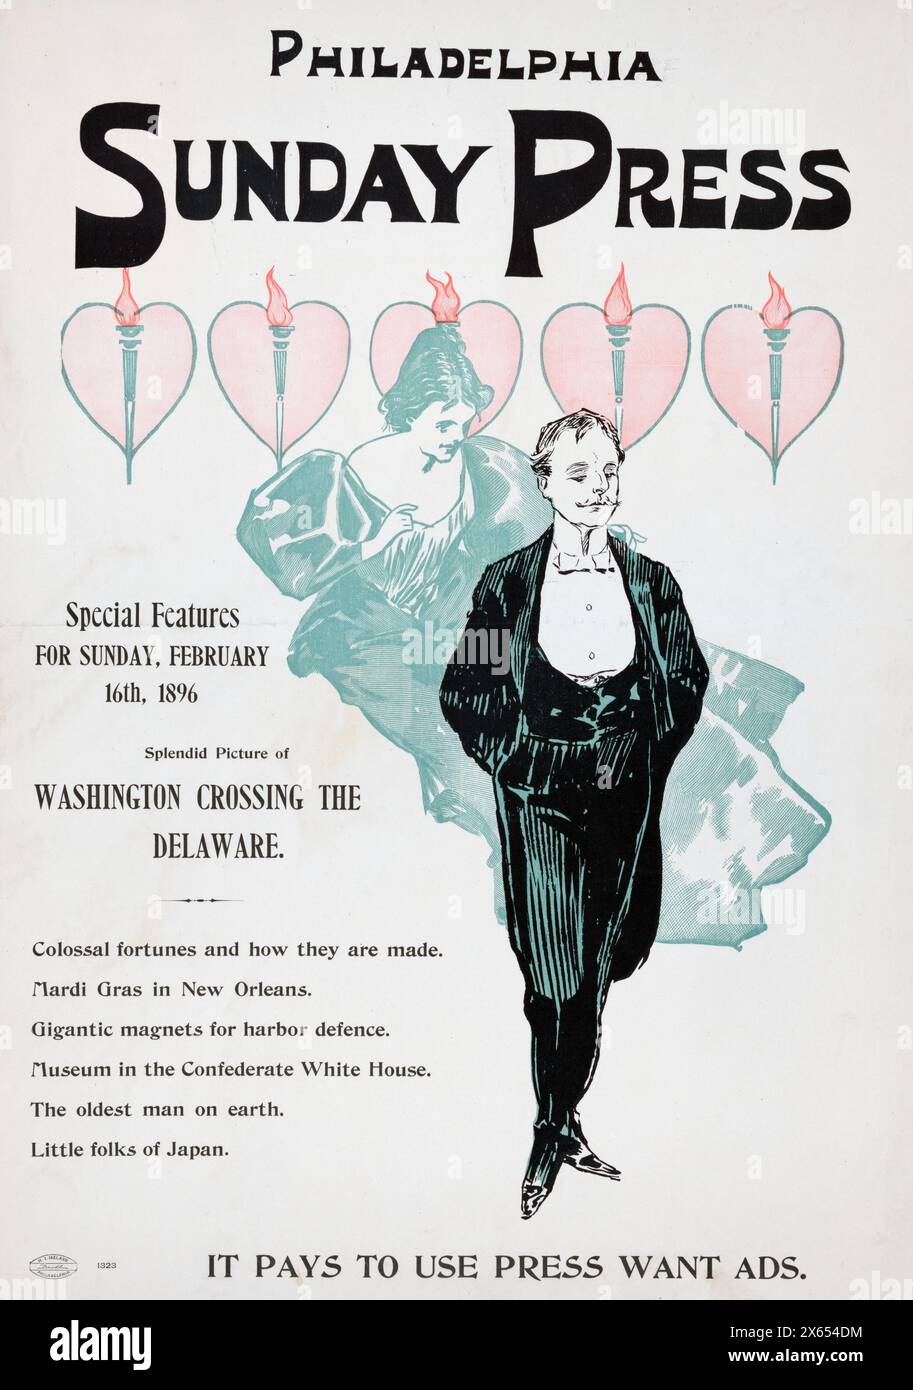 Philadelphia Sunday Press Cover - George Reiter Brill (illustratore americano, 1867-1918) Special Features, 16 febbraio 1896 Foto Stock